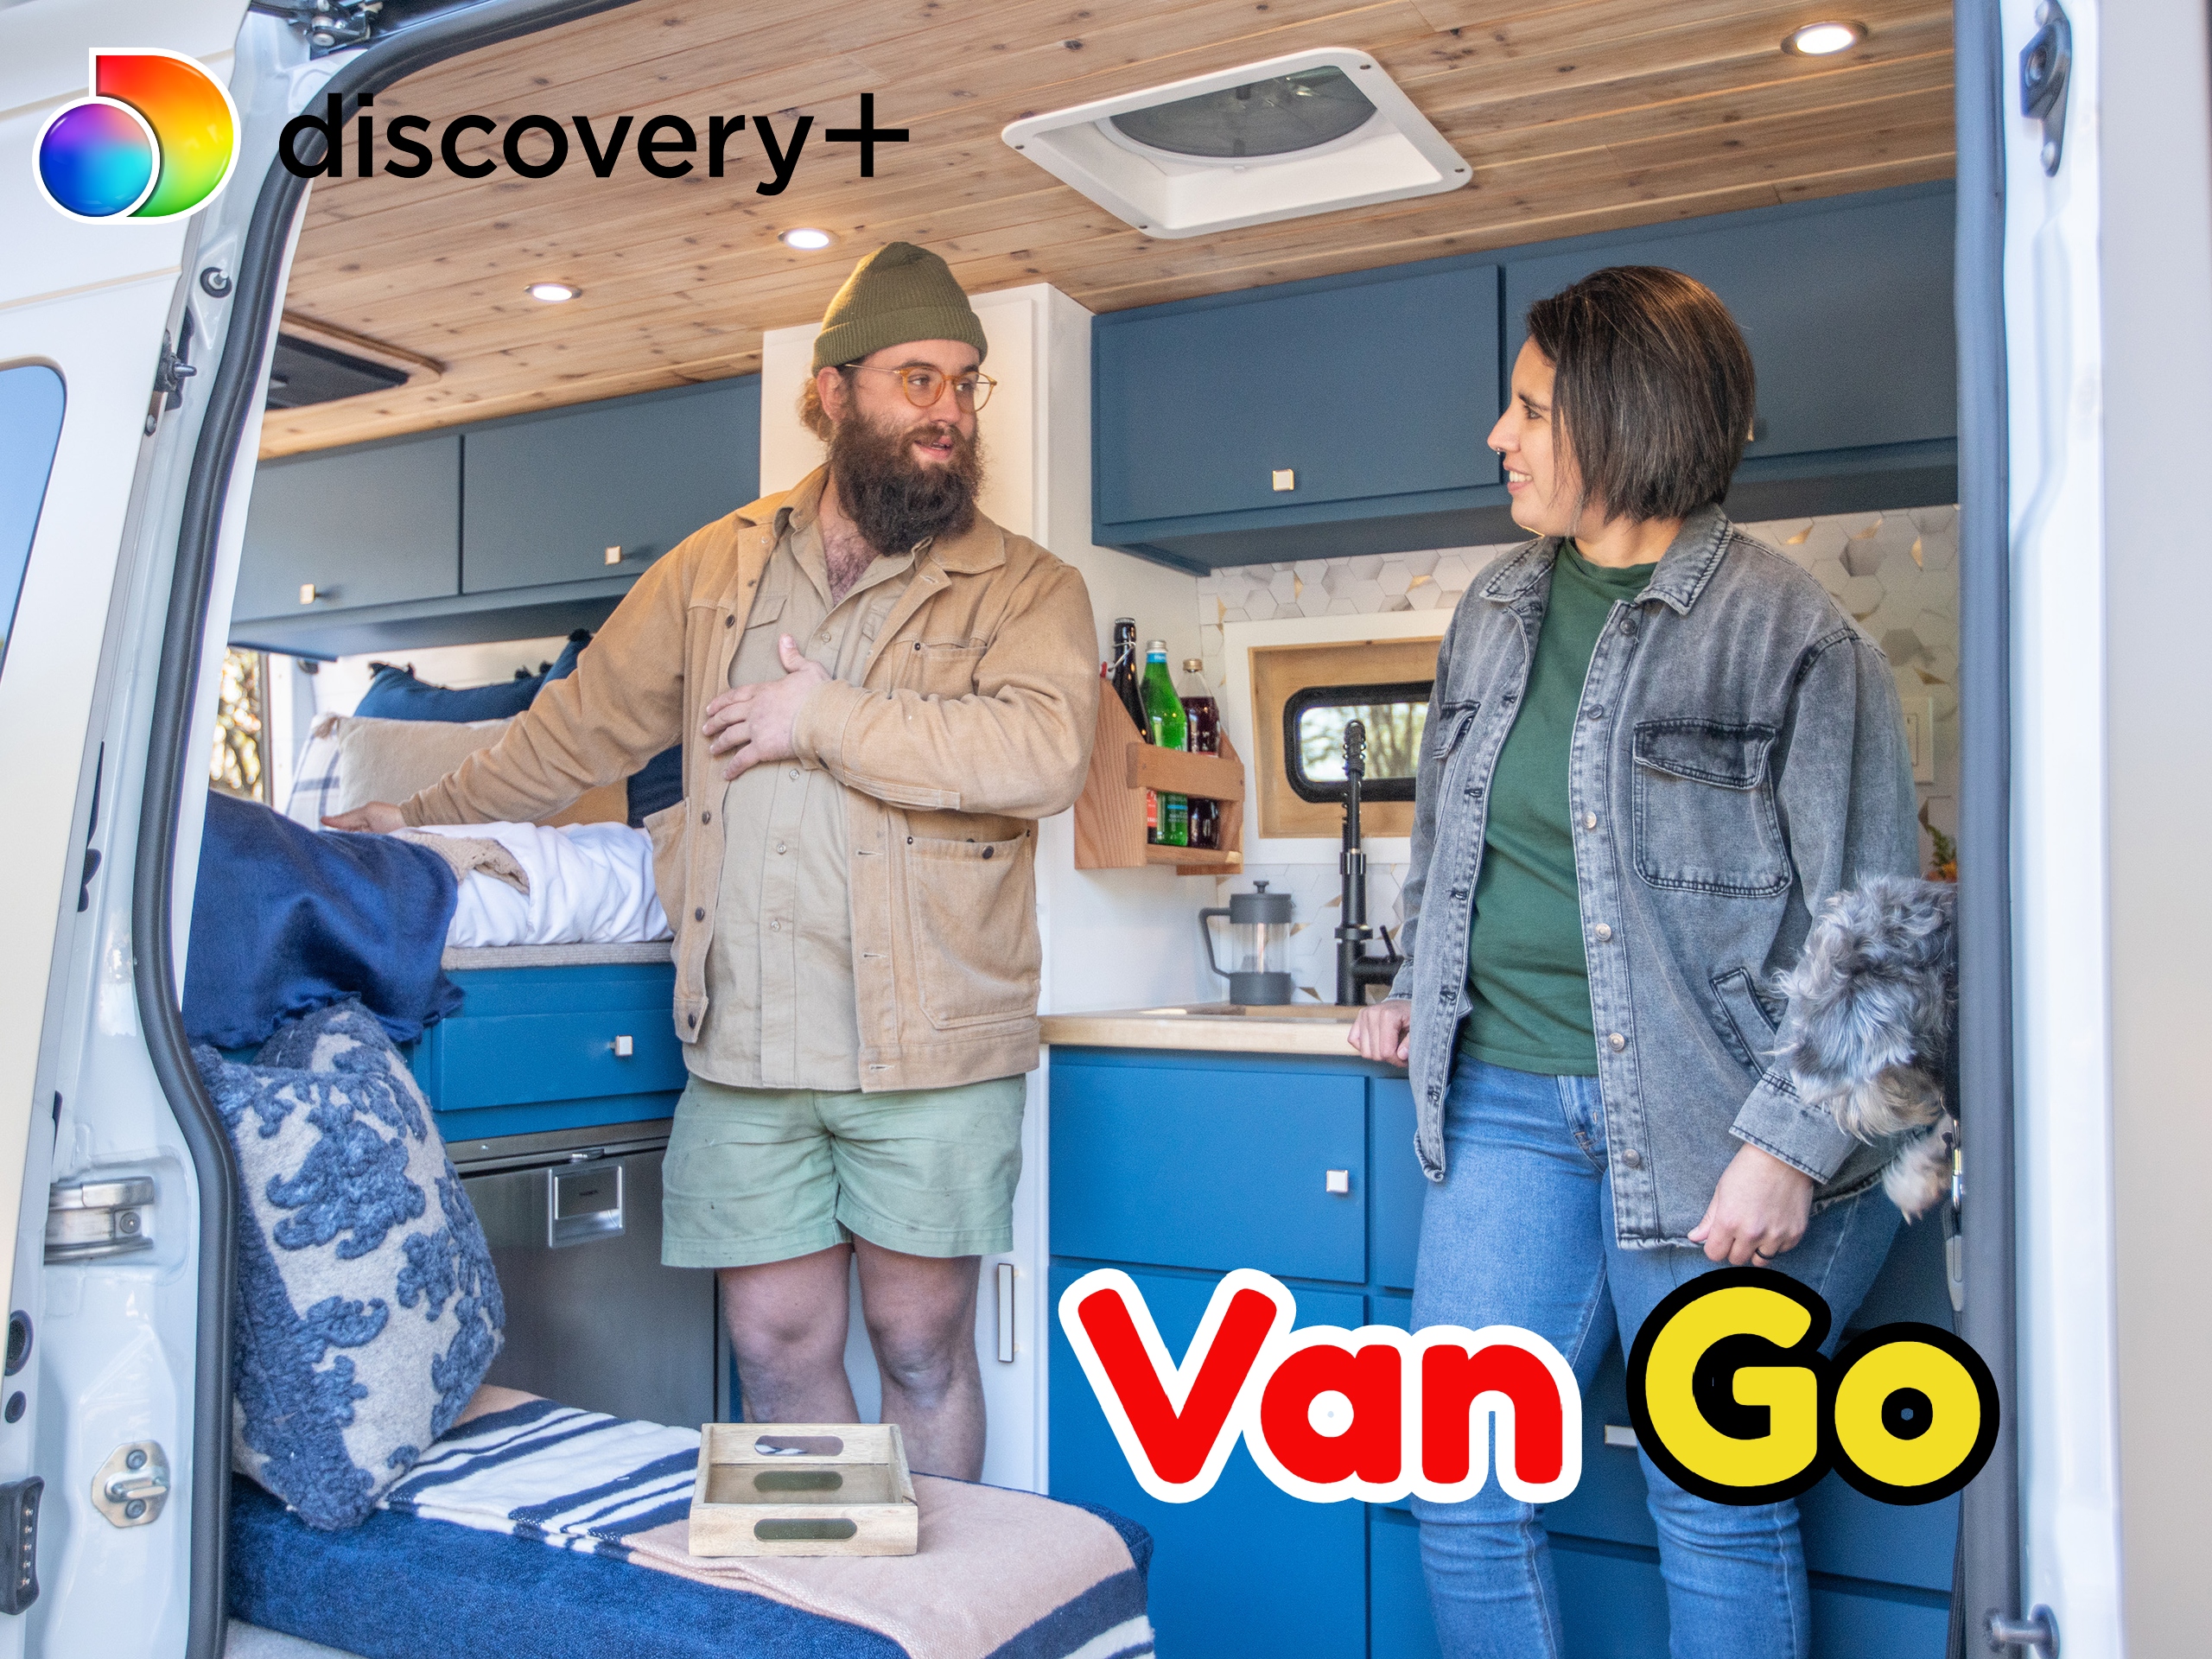 Where to Watch Van Go